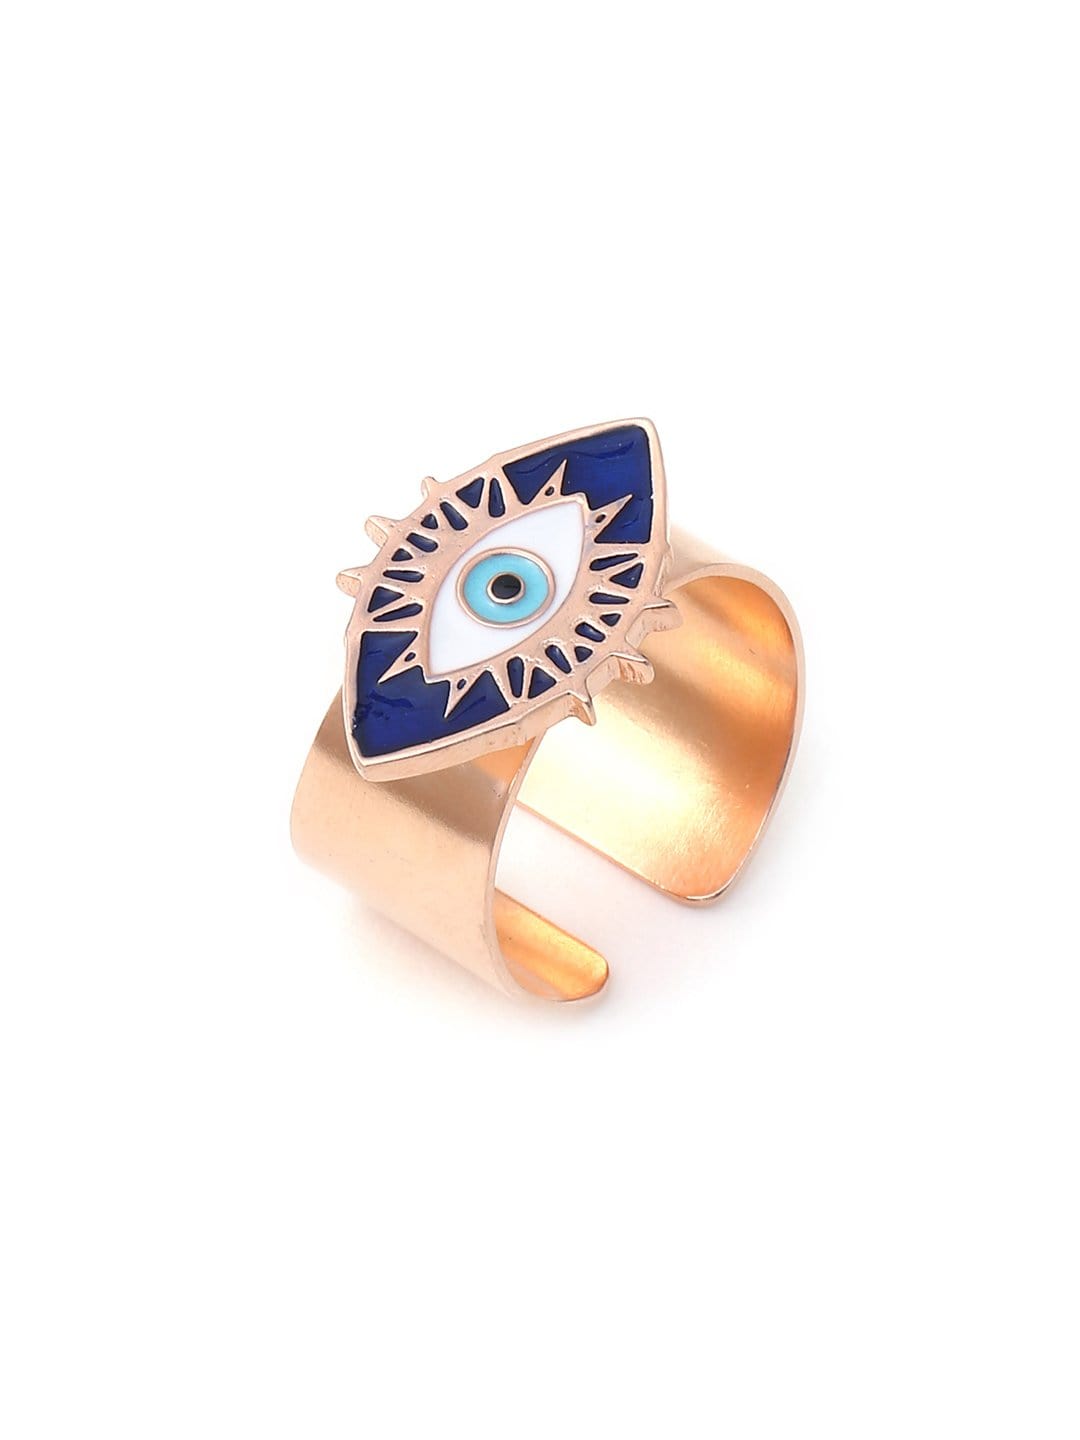 AZGA Evil Eye Adjustable Ring - Rose Gold